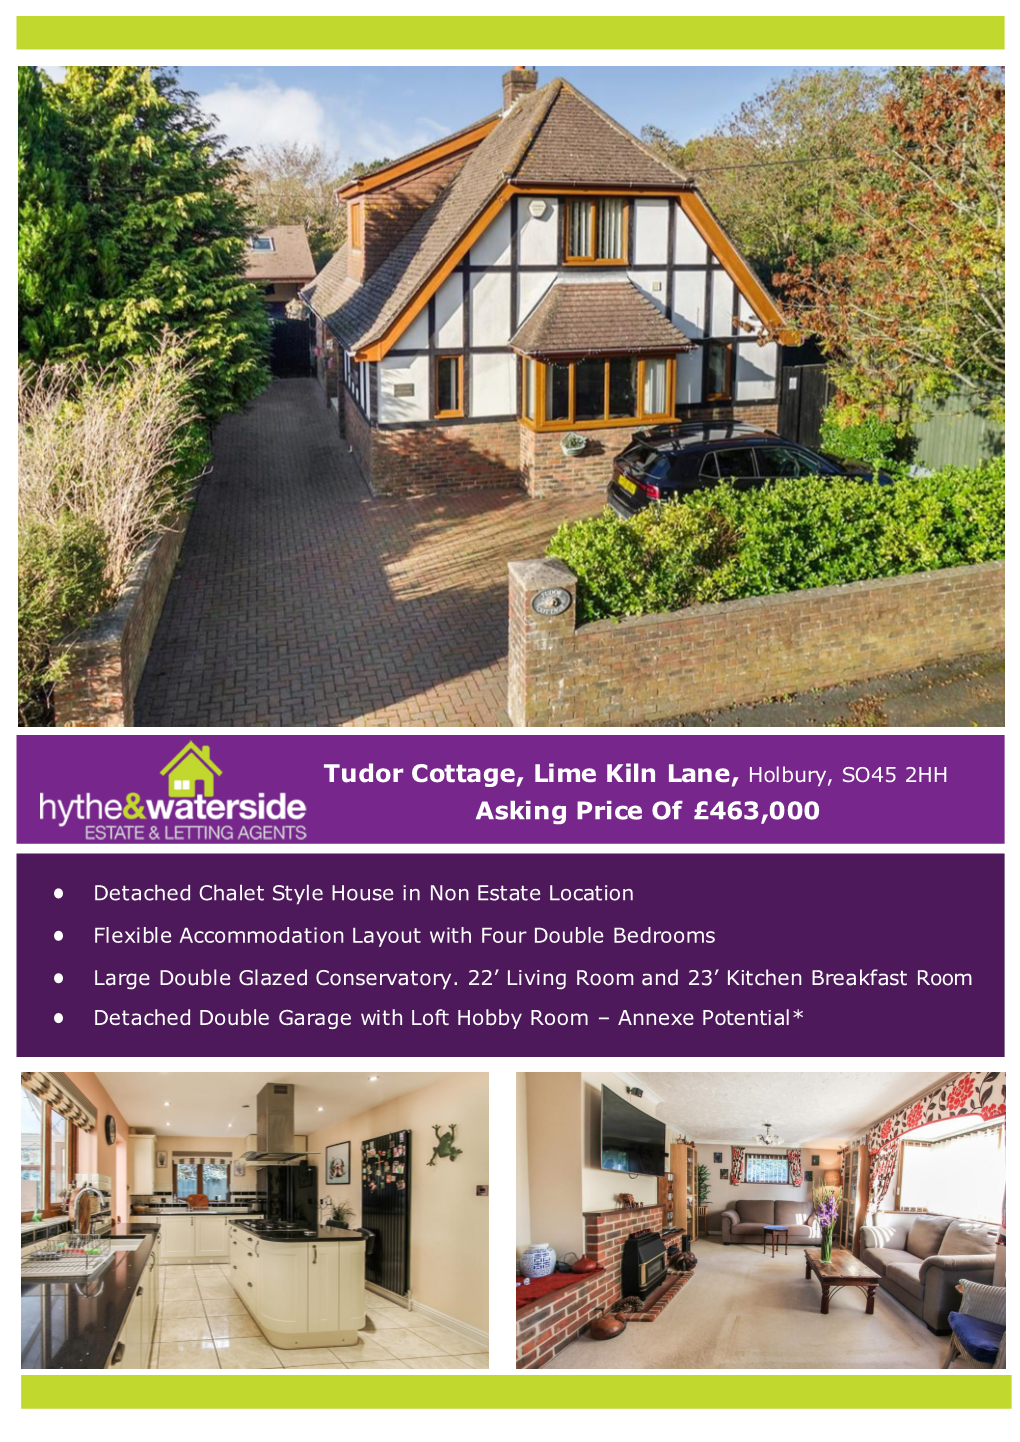 Tudor Cottage, Lime Kiln Lane, Holbury, SO45 2HH Asking Price of £463,000